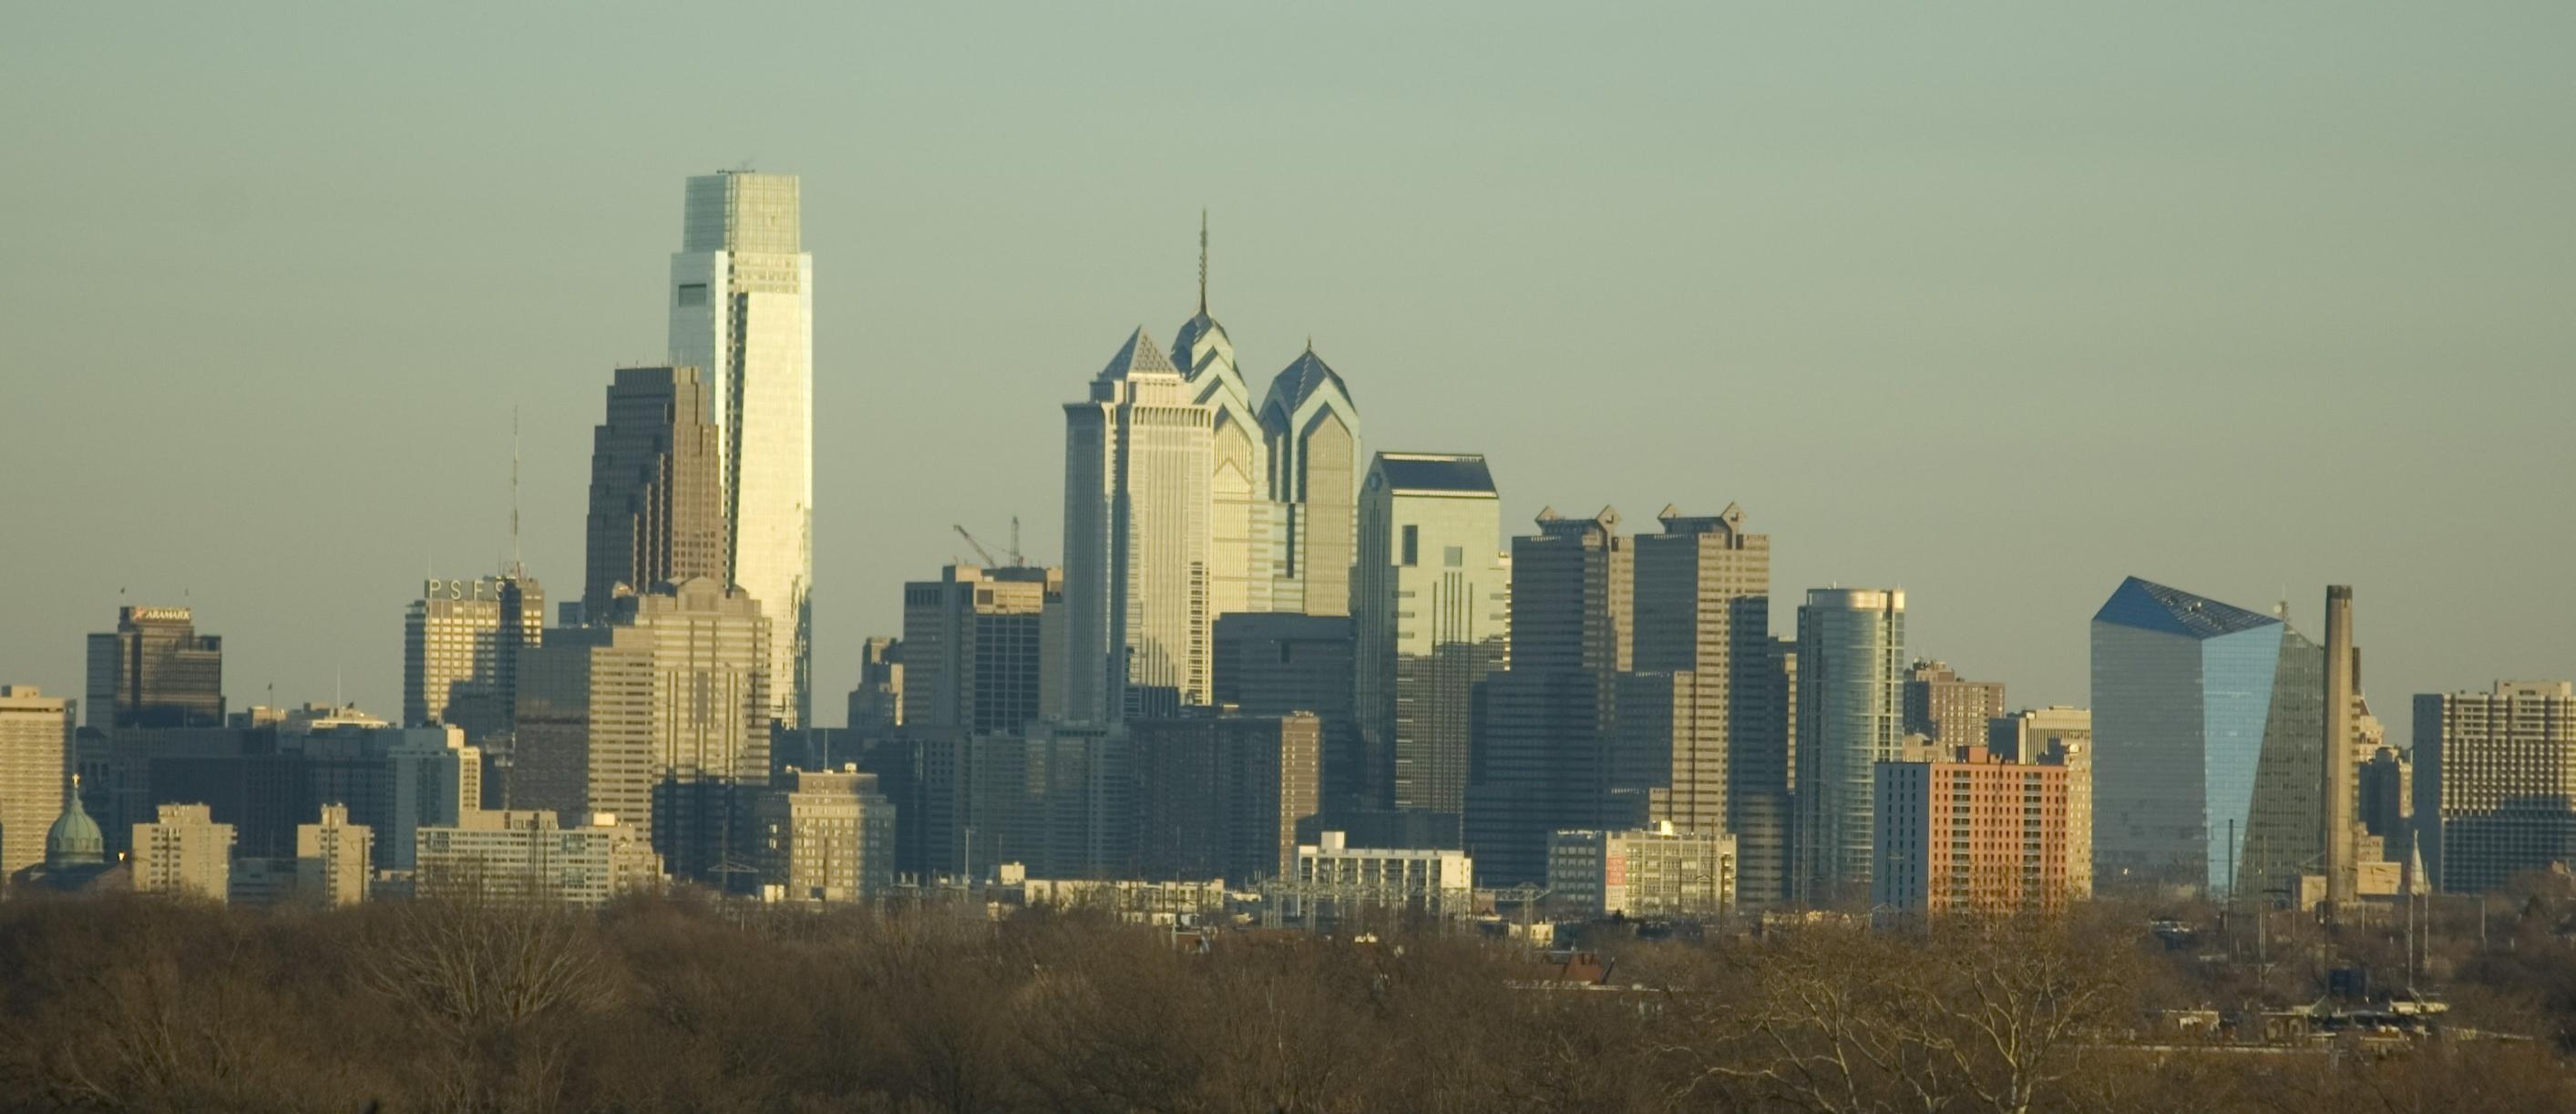 The philadelphia skyline - High Quality and Resolution